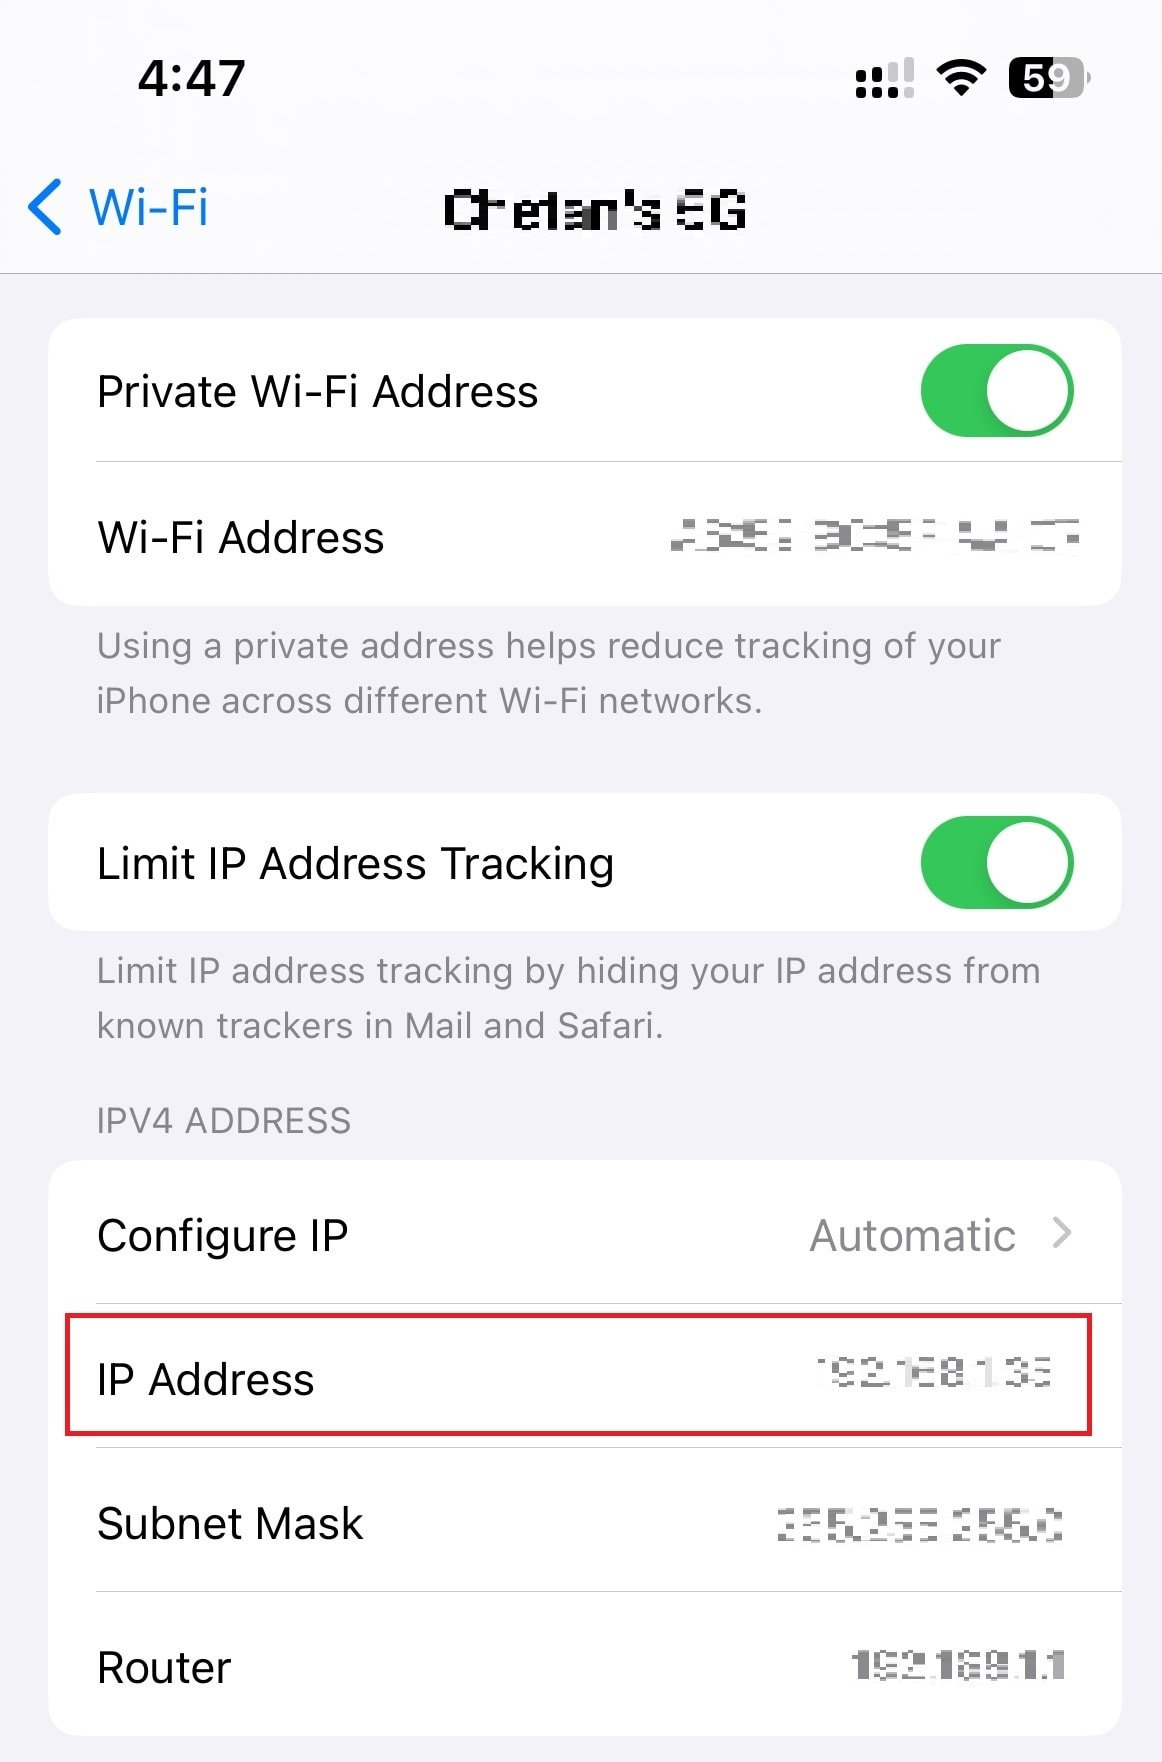 View your IP address next to "IP Address"